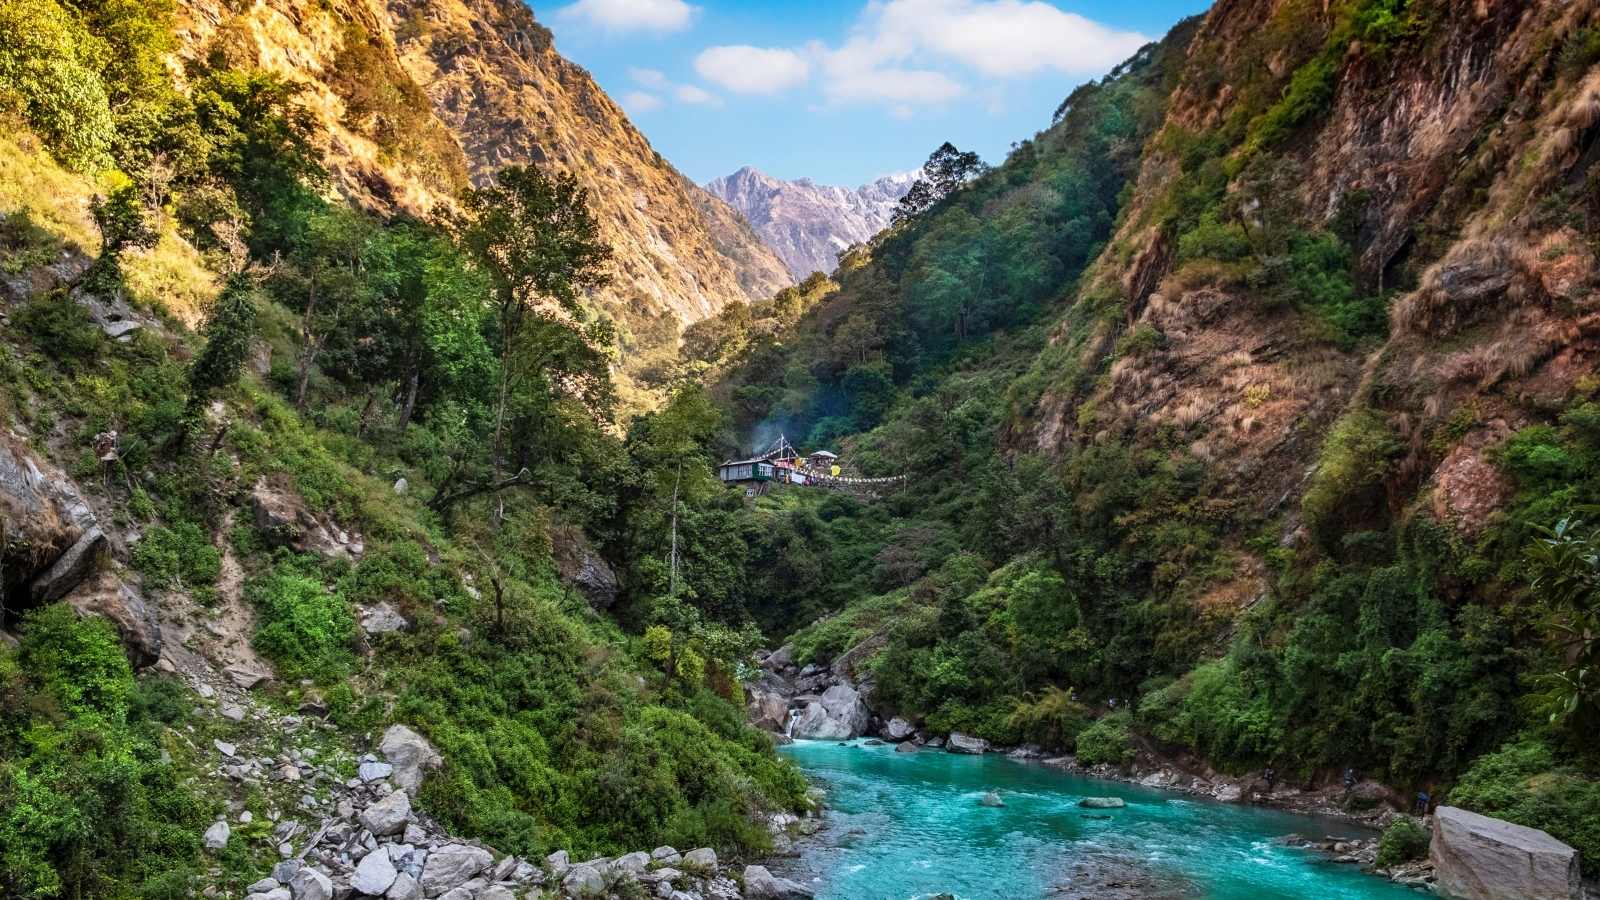 Nepal langtang river valley